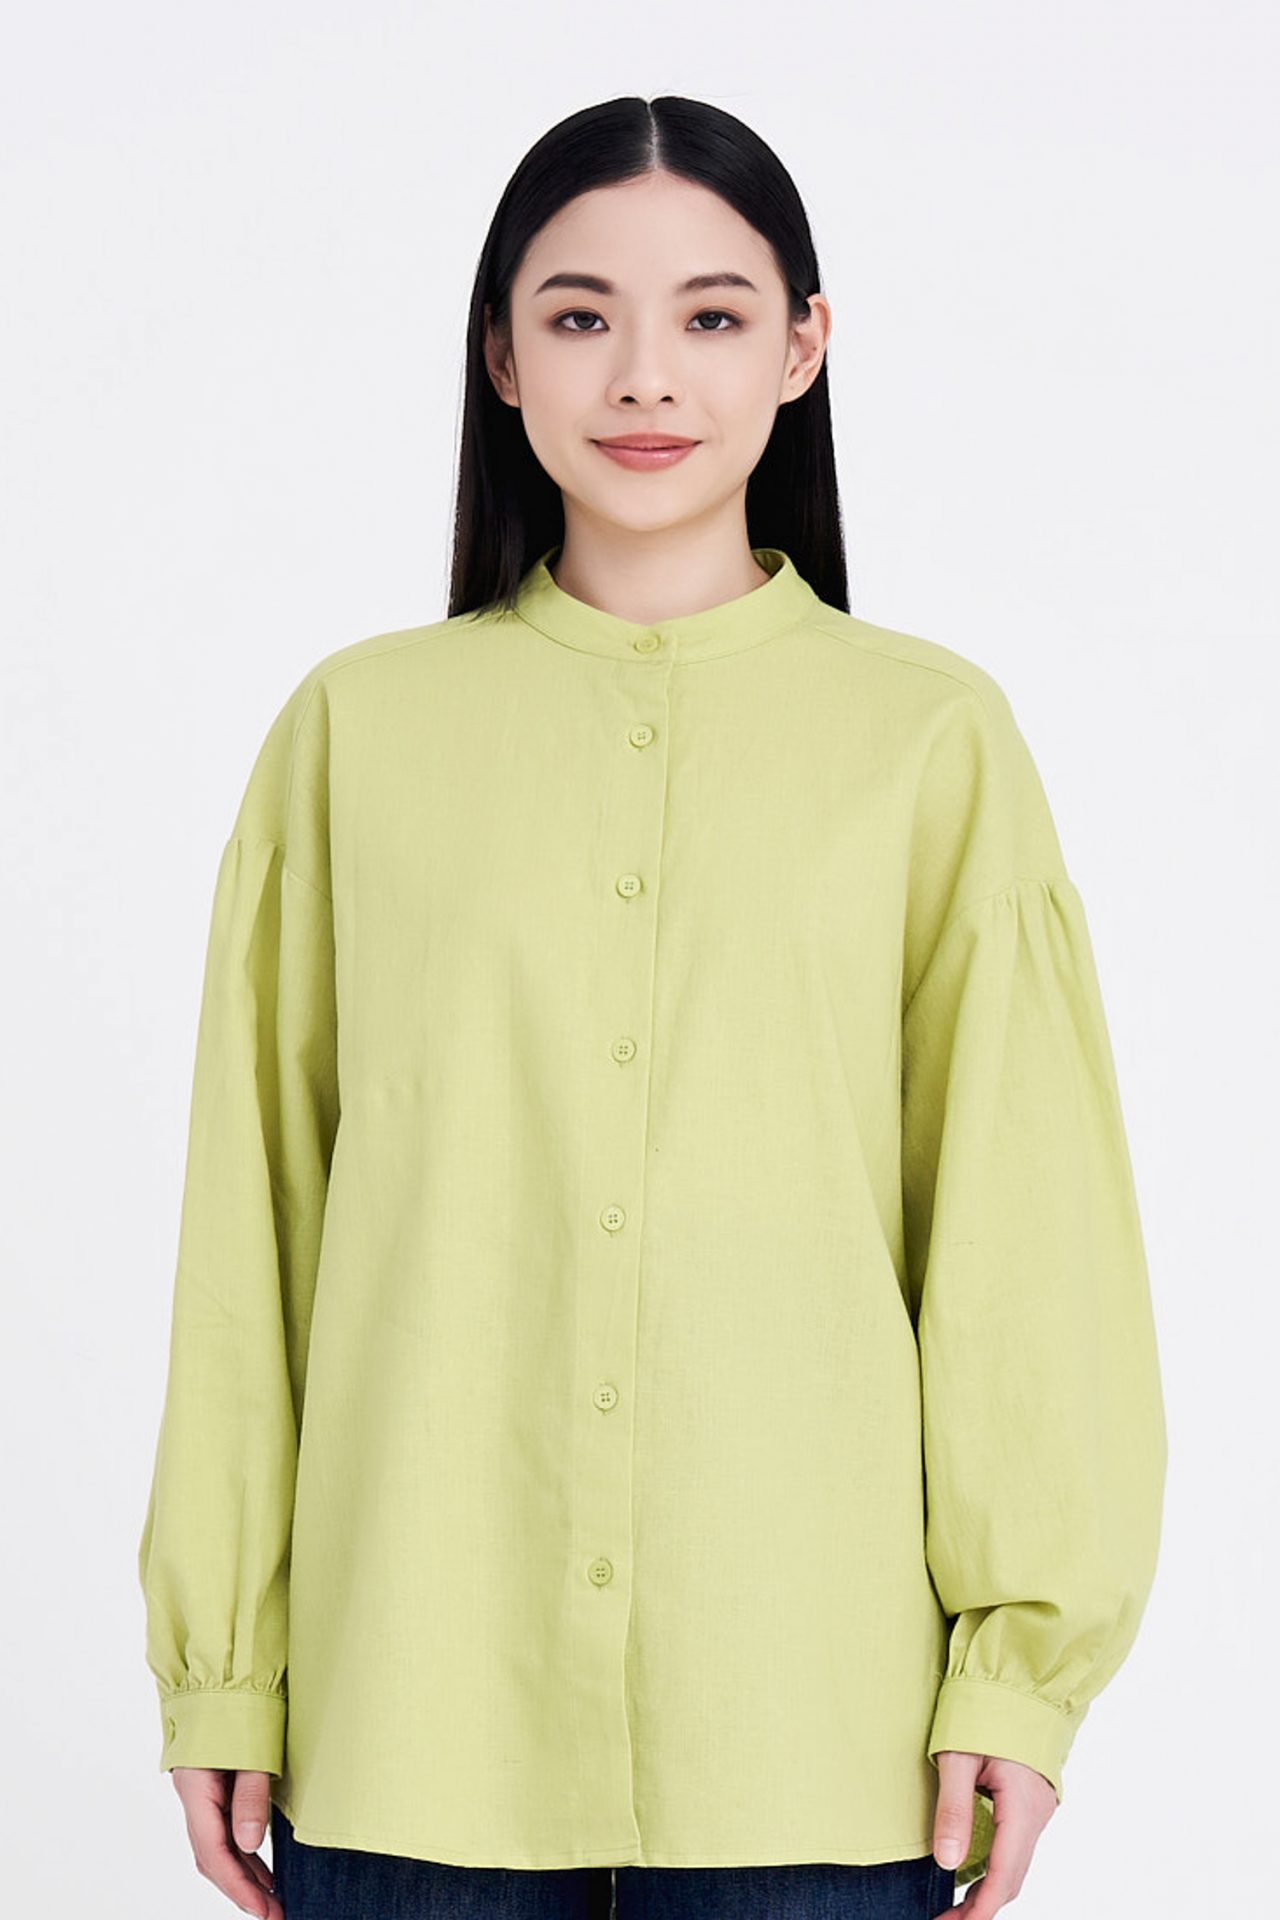 Tangerine Top  Tops, Long sleeve blouse, Women